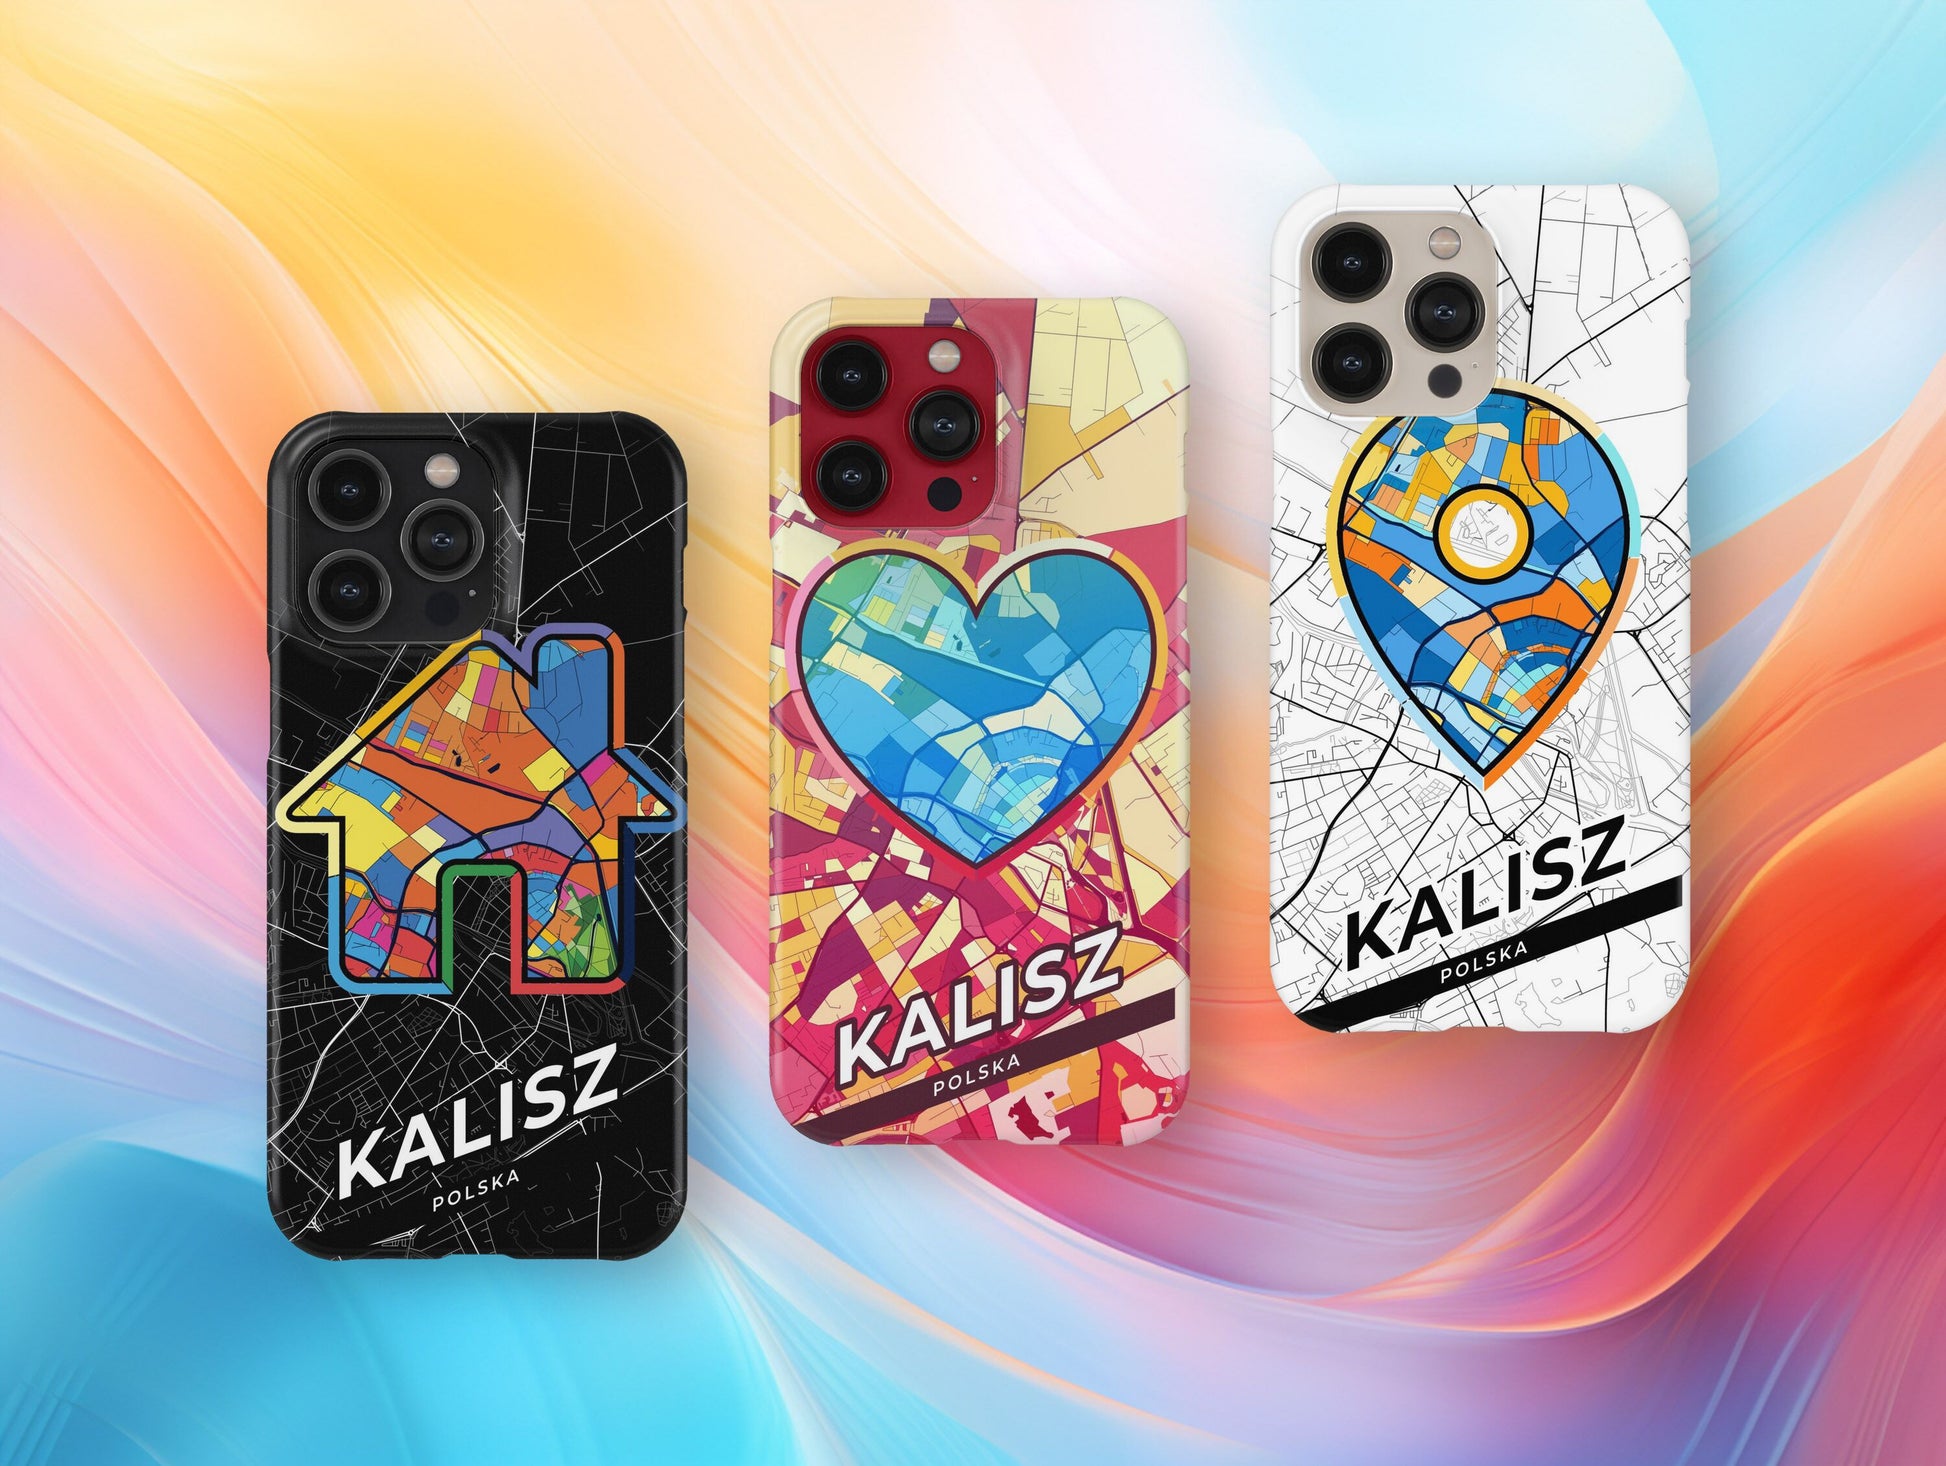 Kalisz Poland slim phone case with colorful icon. Birthday, wedding or housewarming gift. Couple match cases.